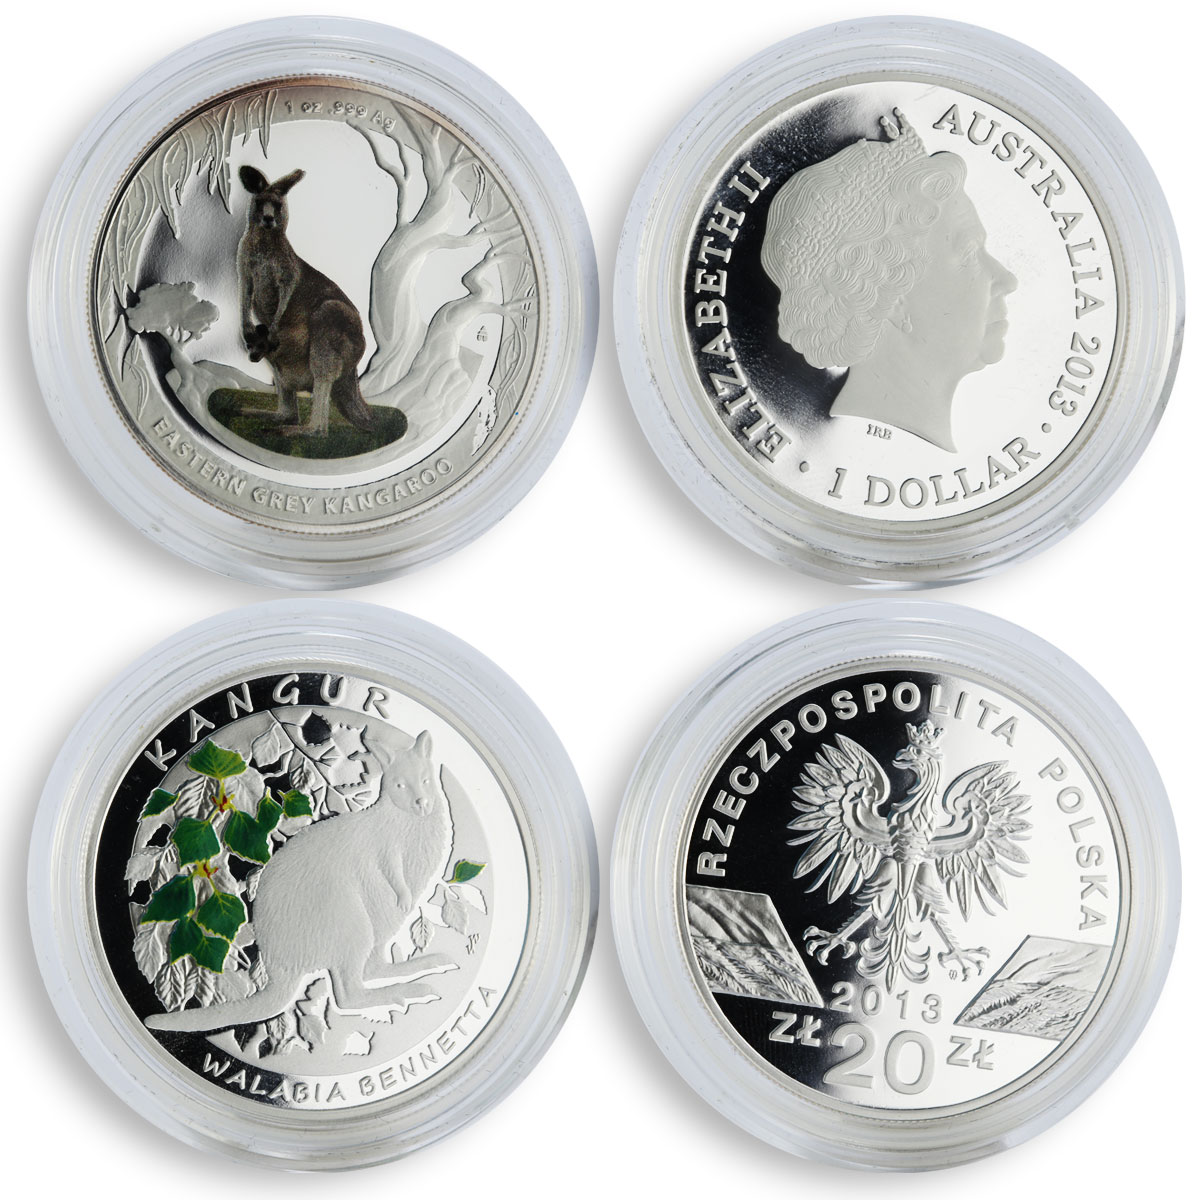 Australia Poland set of 2 coins Kangaroo colored proof silver coin 2013